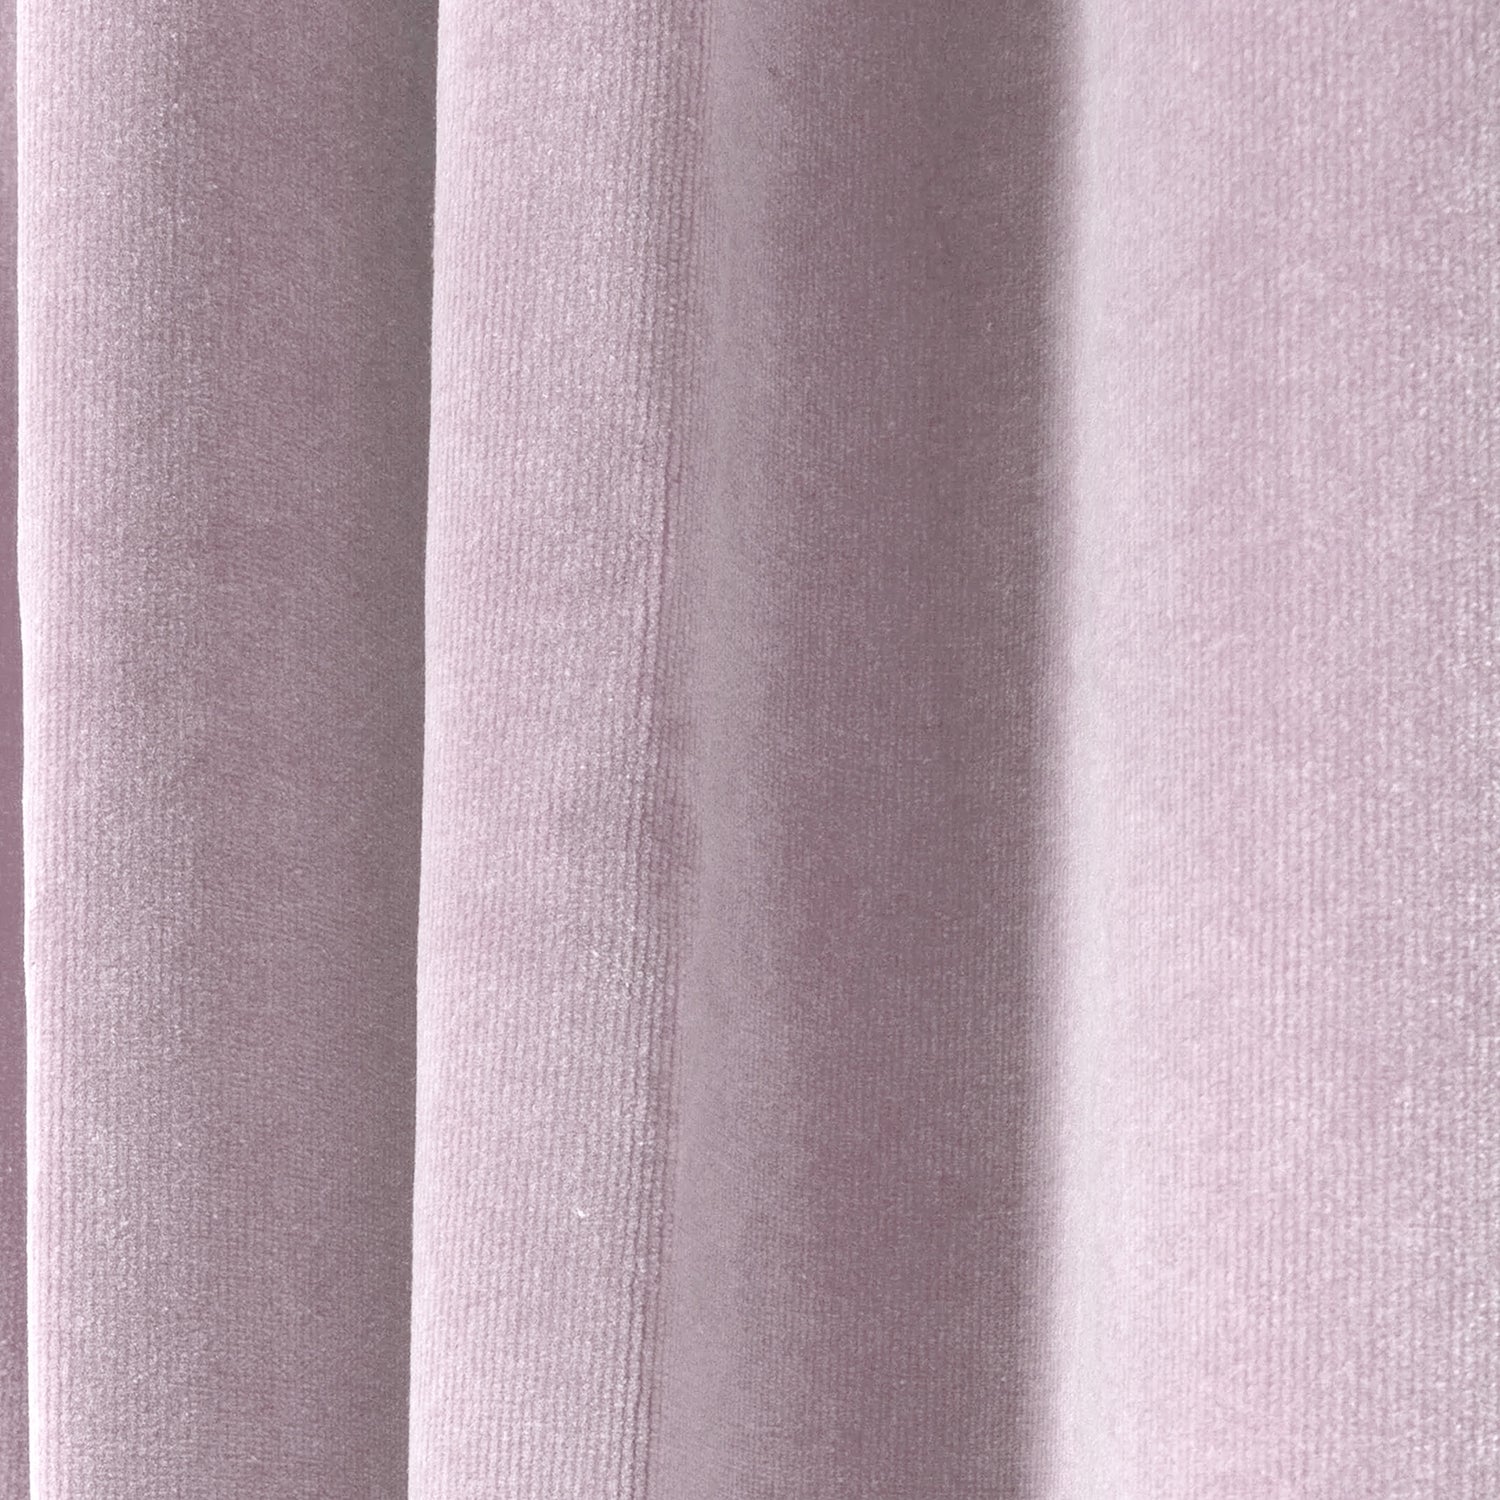 Lilac Velvet Curtain Close-Up